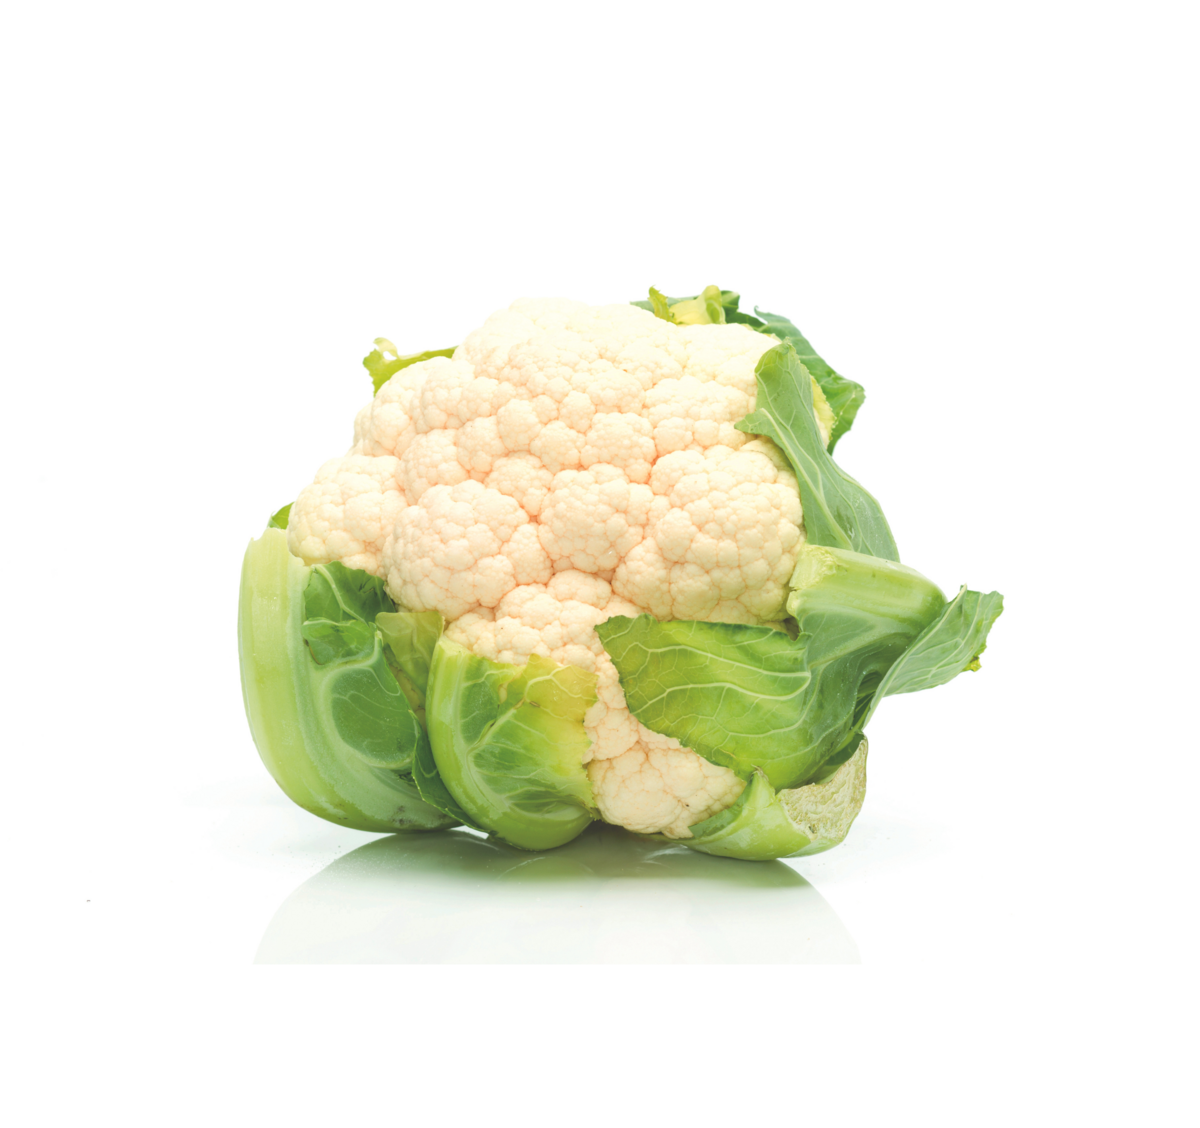 Cauliflower cultivation for the best quality cauliflower